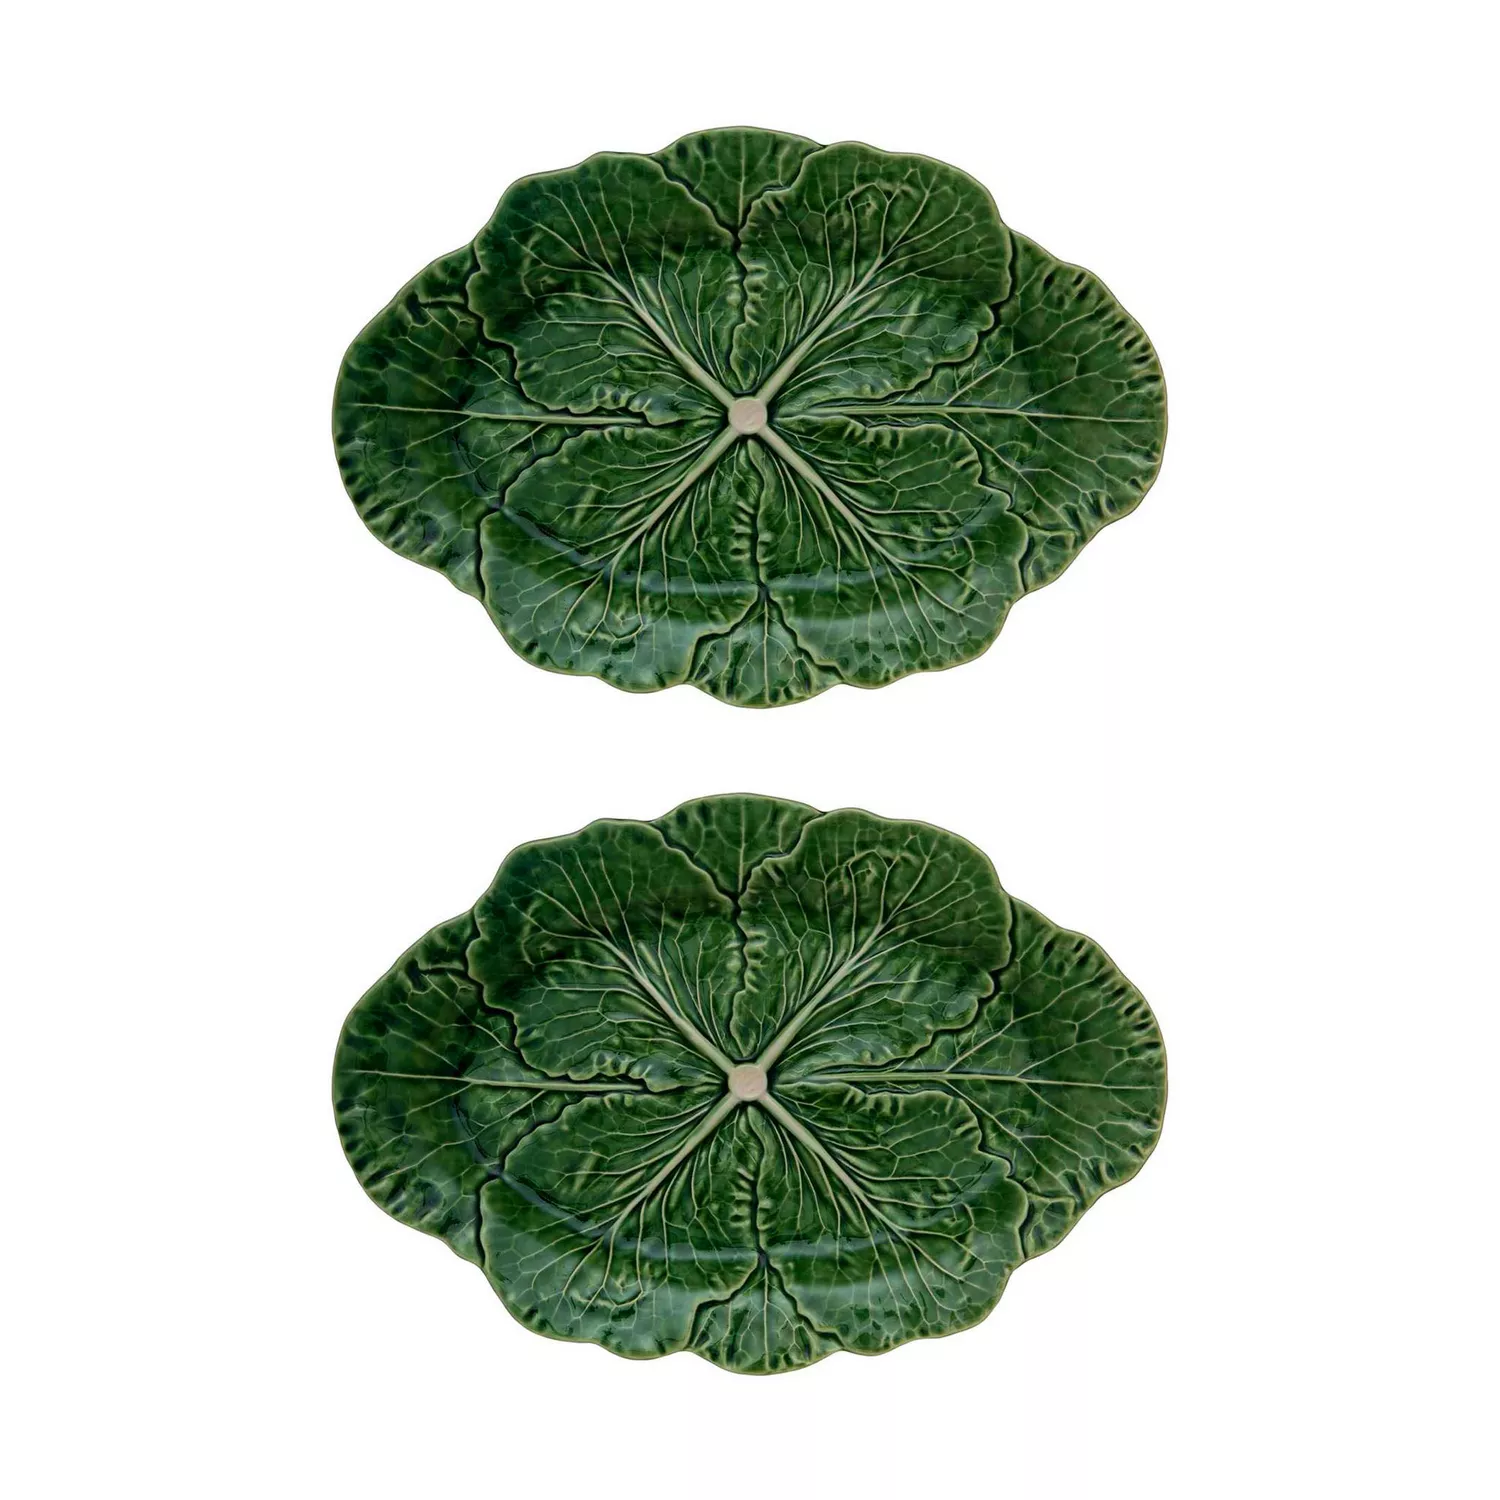 Bordallo Pinheiro Cabbage Oval Platter, Set of 2